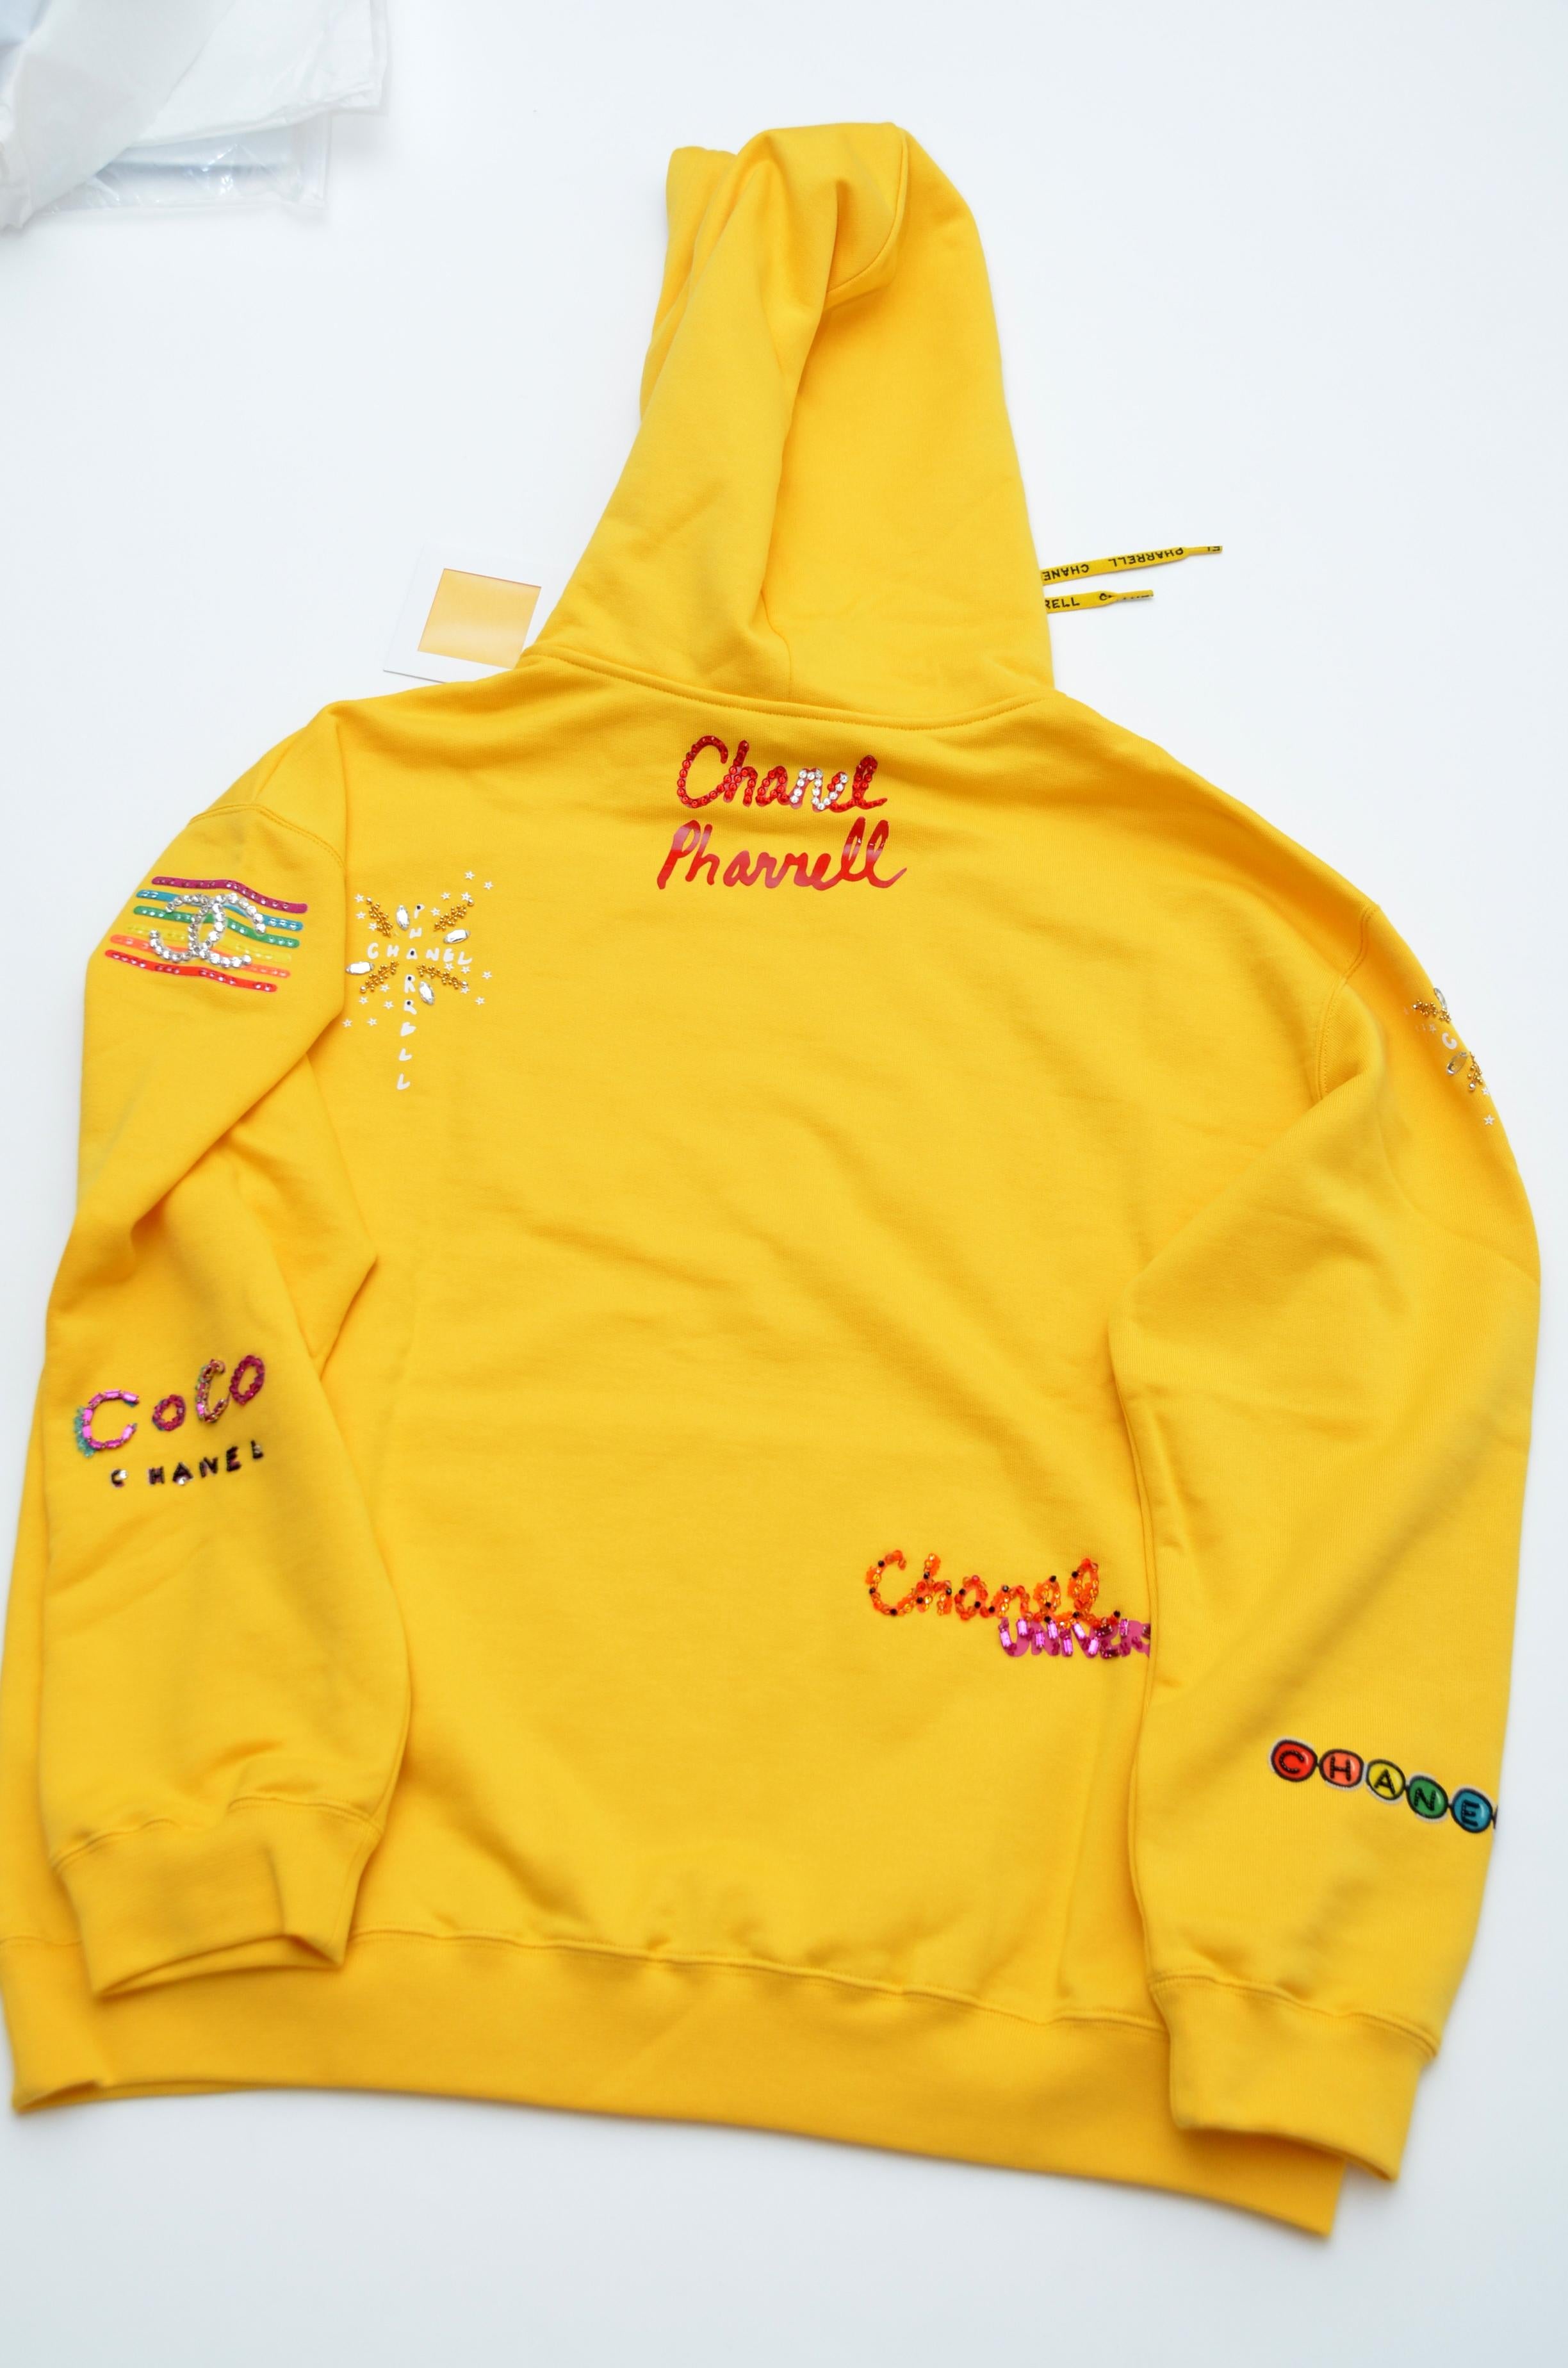 chanel x pharrell hoodie